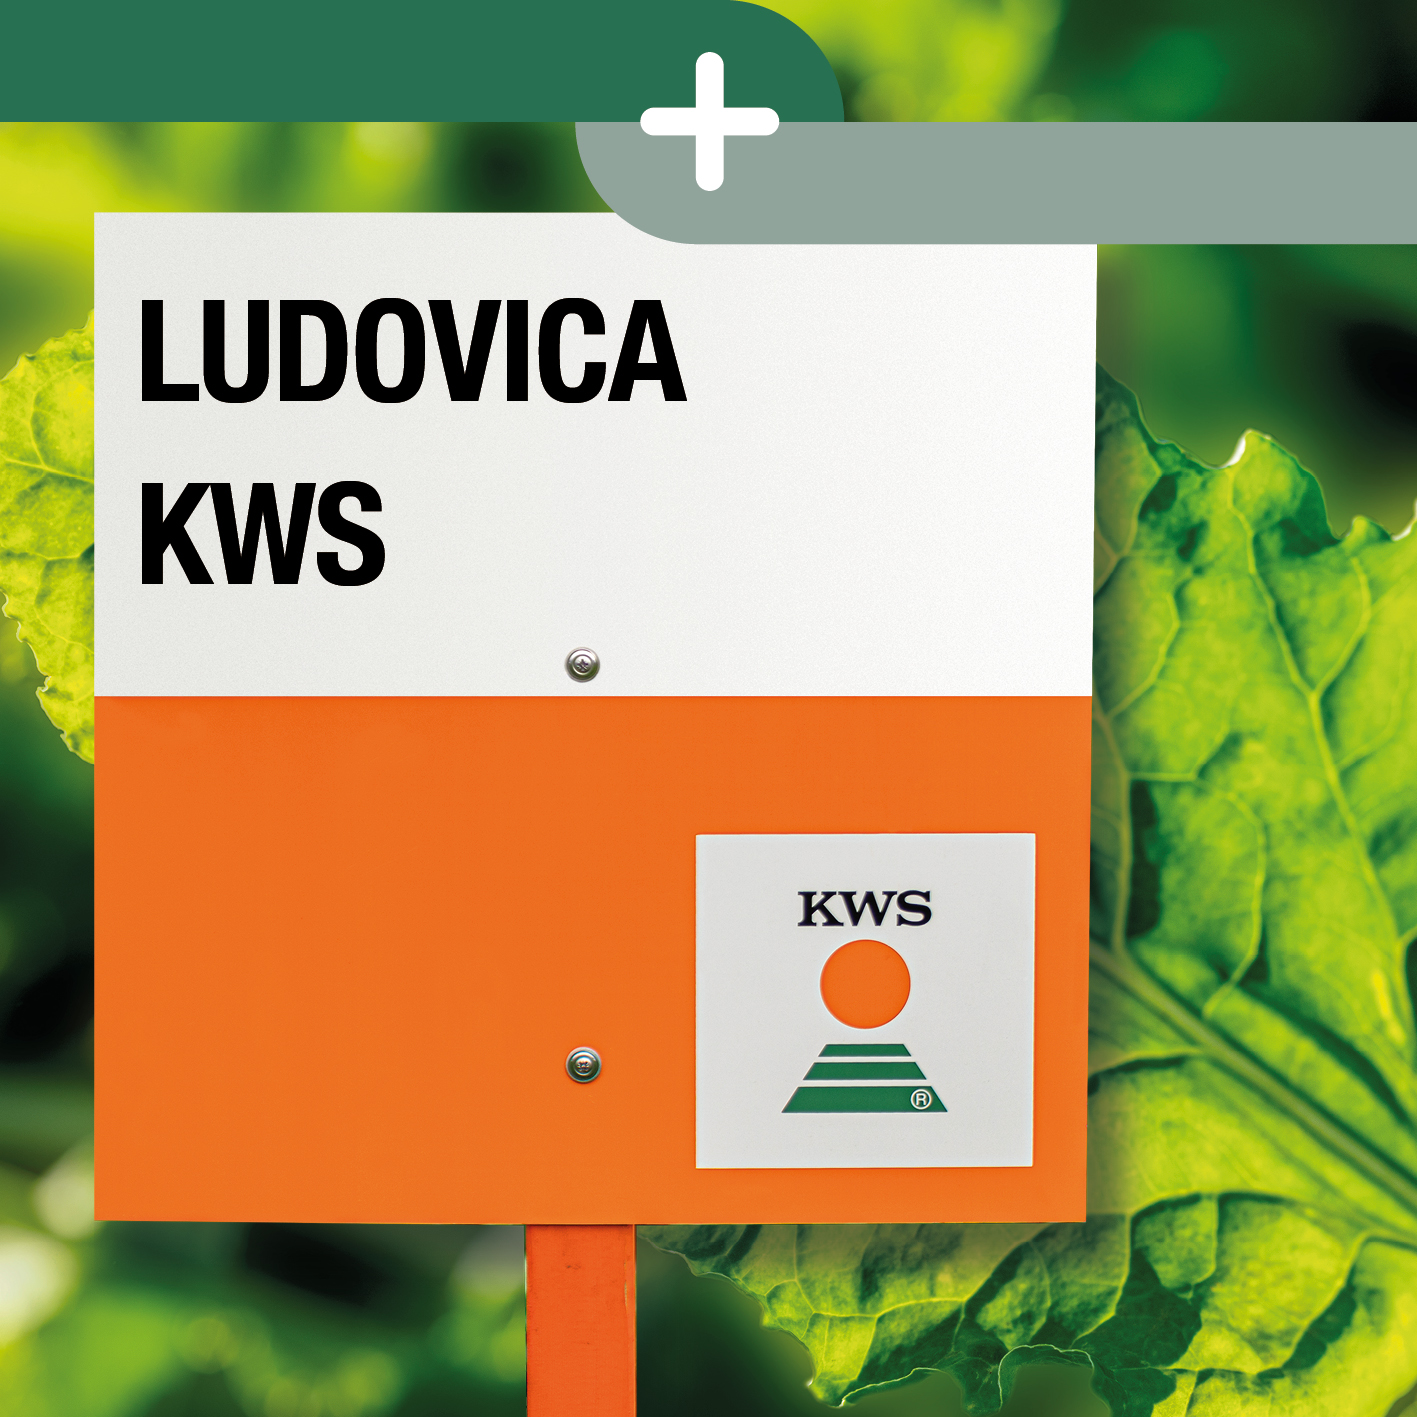 LUDOVICA KWS energy